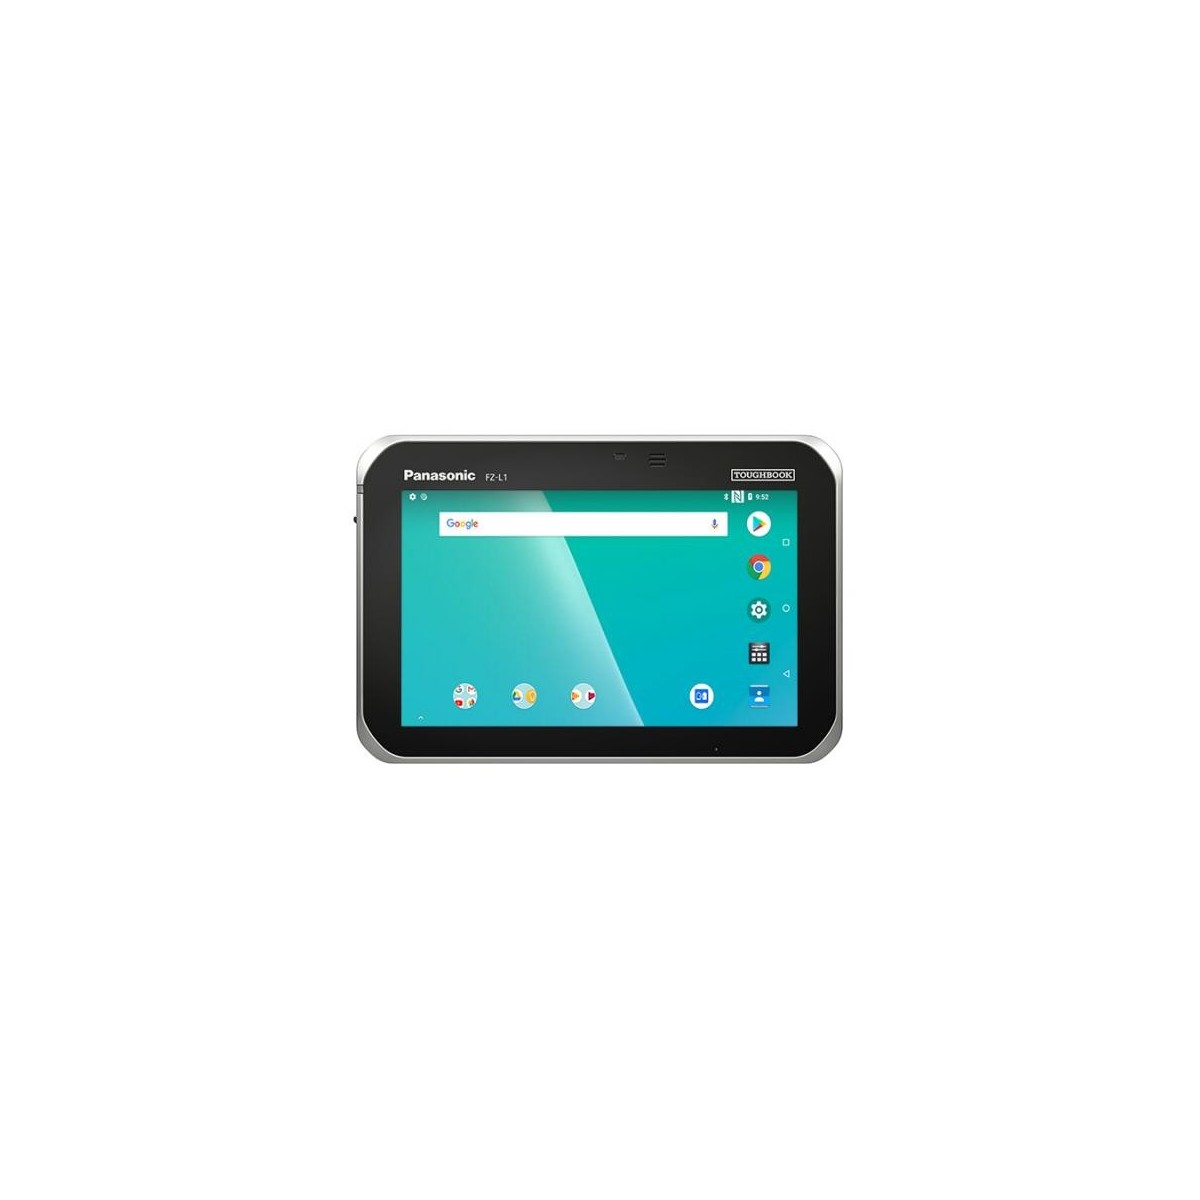 Panasonic Toughbook FZ-L1 - 17.8 cm (7) - 1280 x 720 pixels - 16 GB - 2 GB - Android 8.1 - Black - Silver